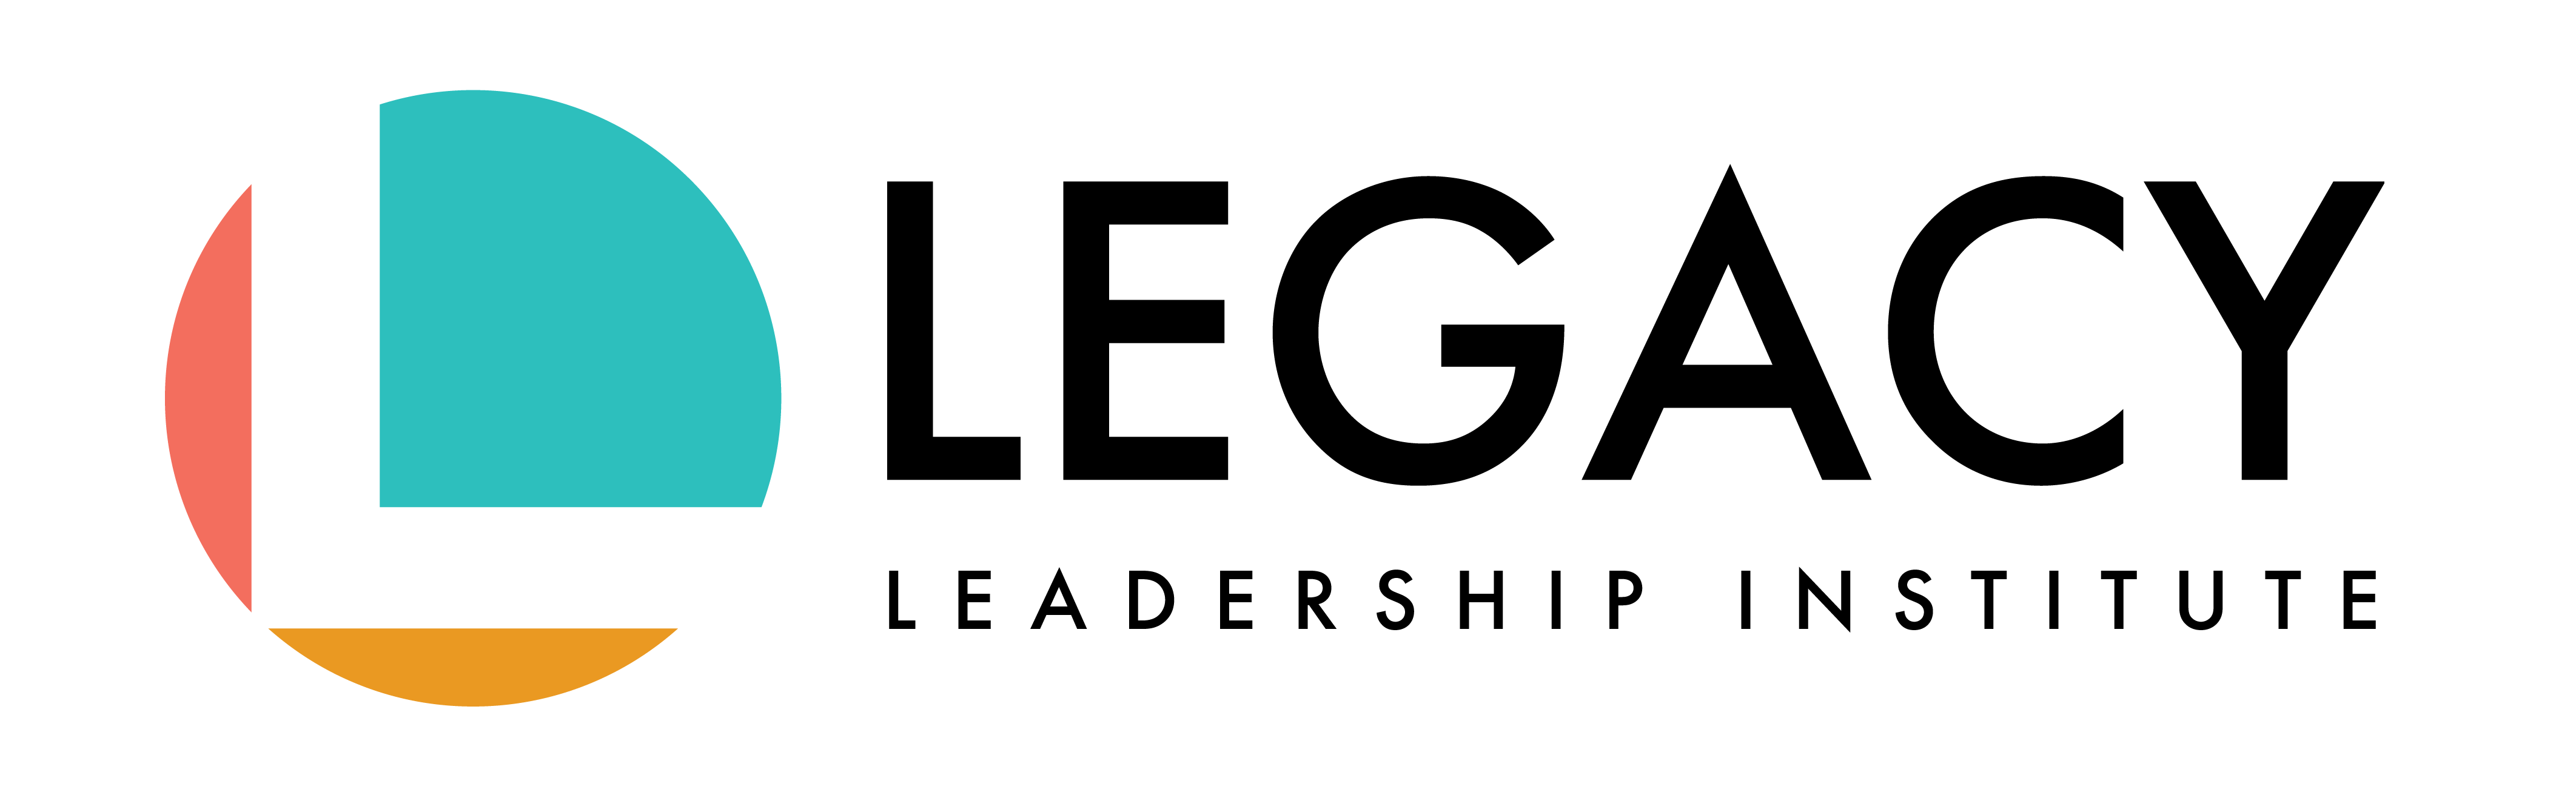 Legacy Leadership Institute